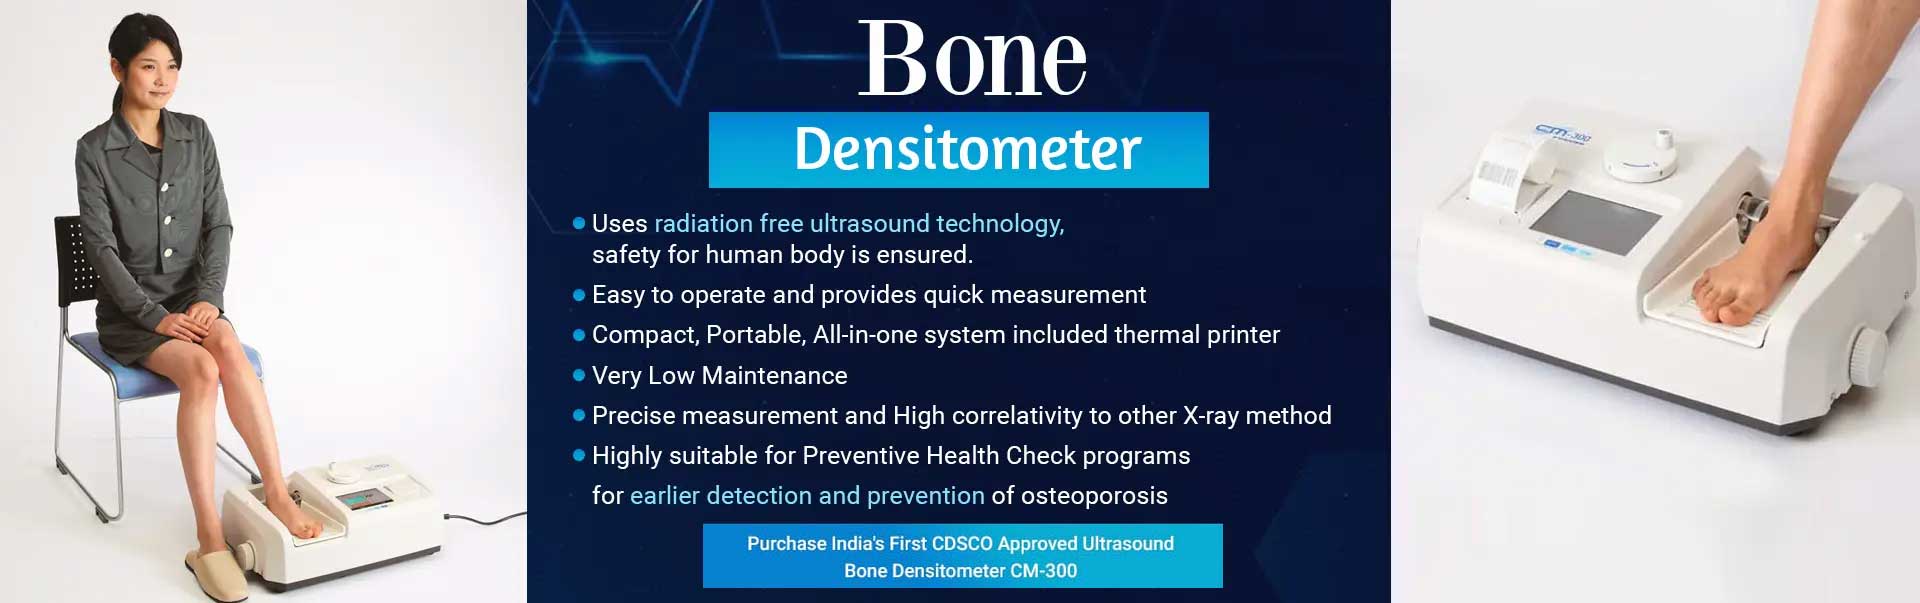 Bone Densitometer Manufacturers in Kolkata